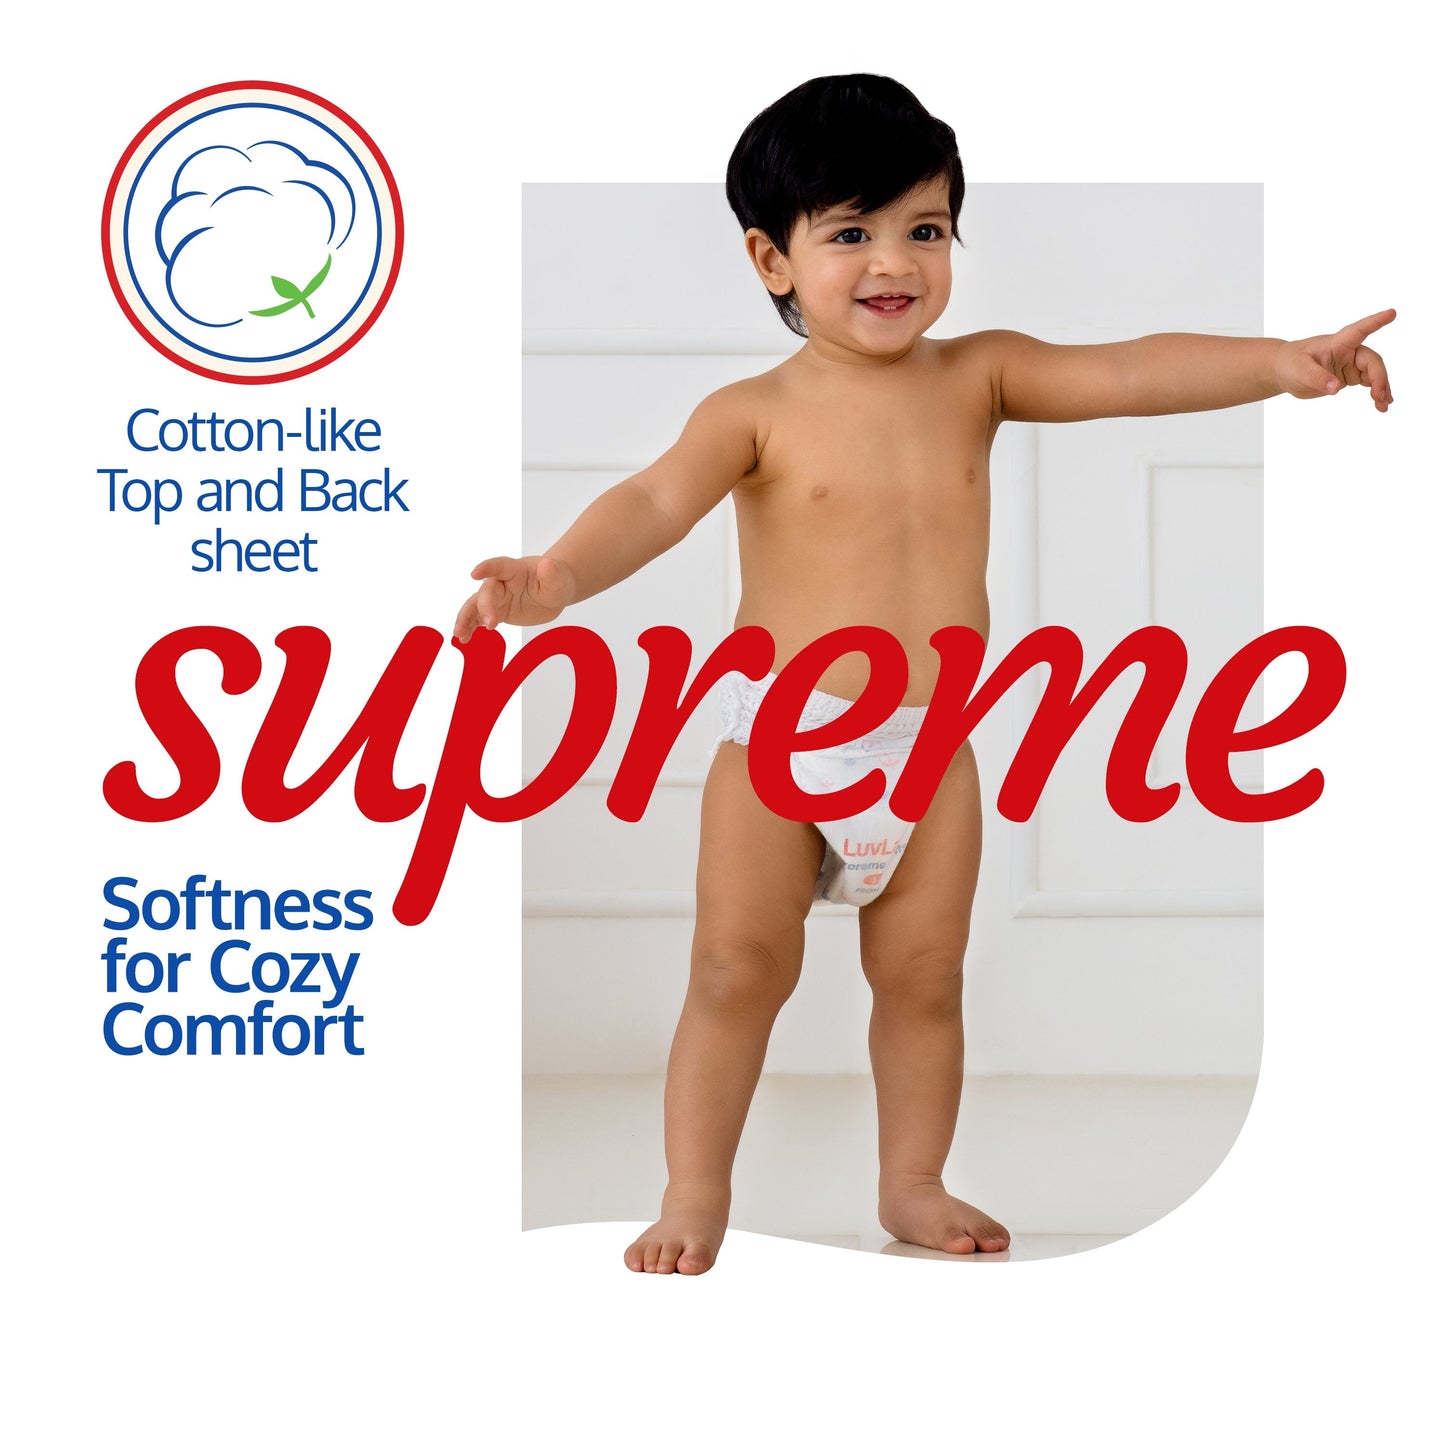 Supreme Diaper Pants New Born, 0-5Kg, 60Pcs